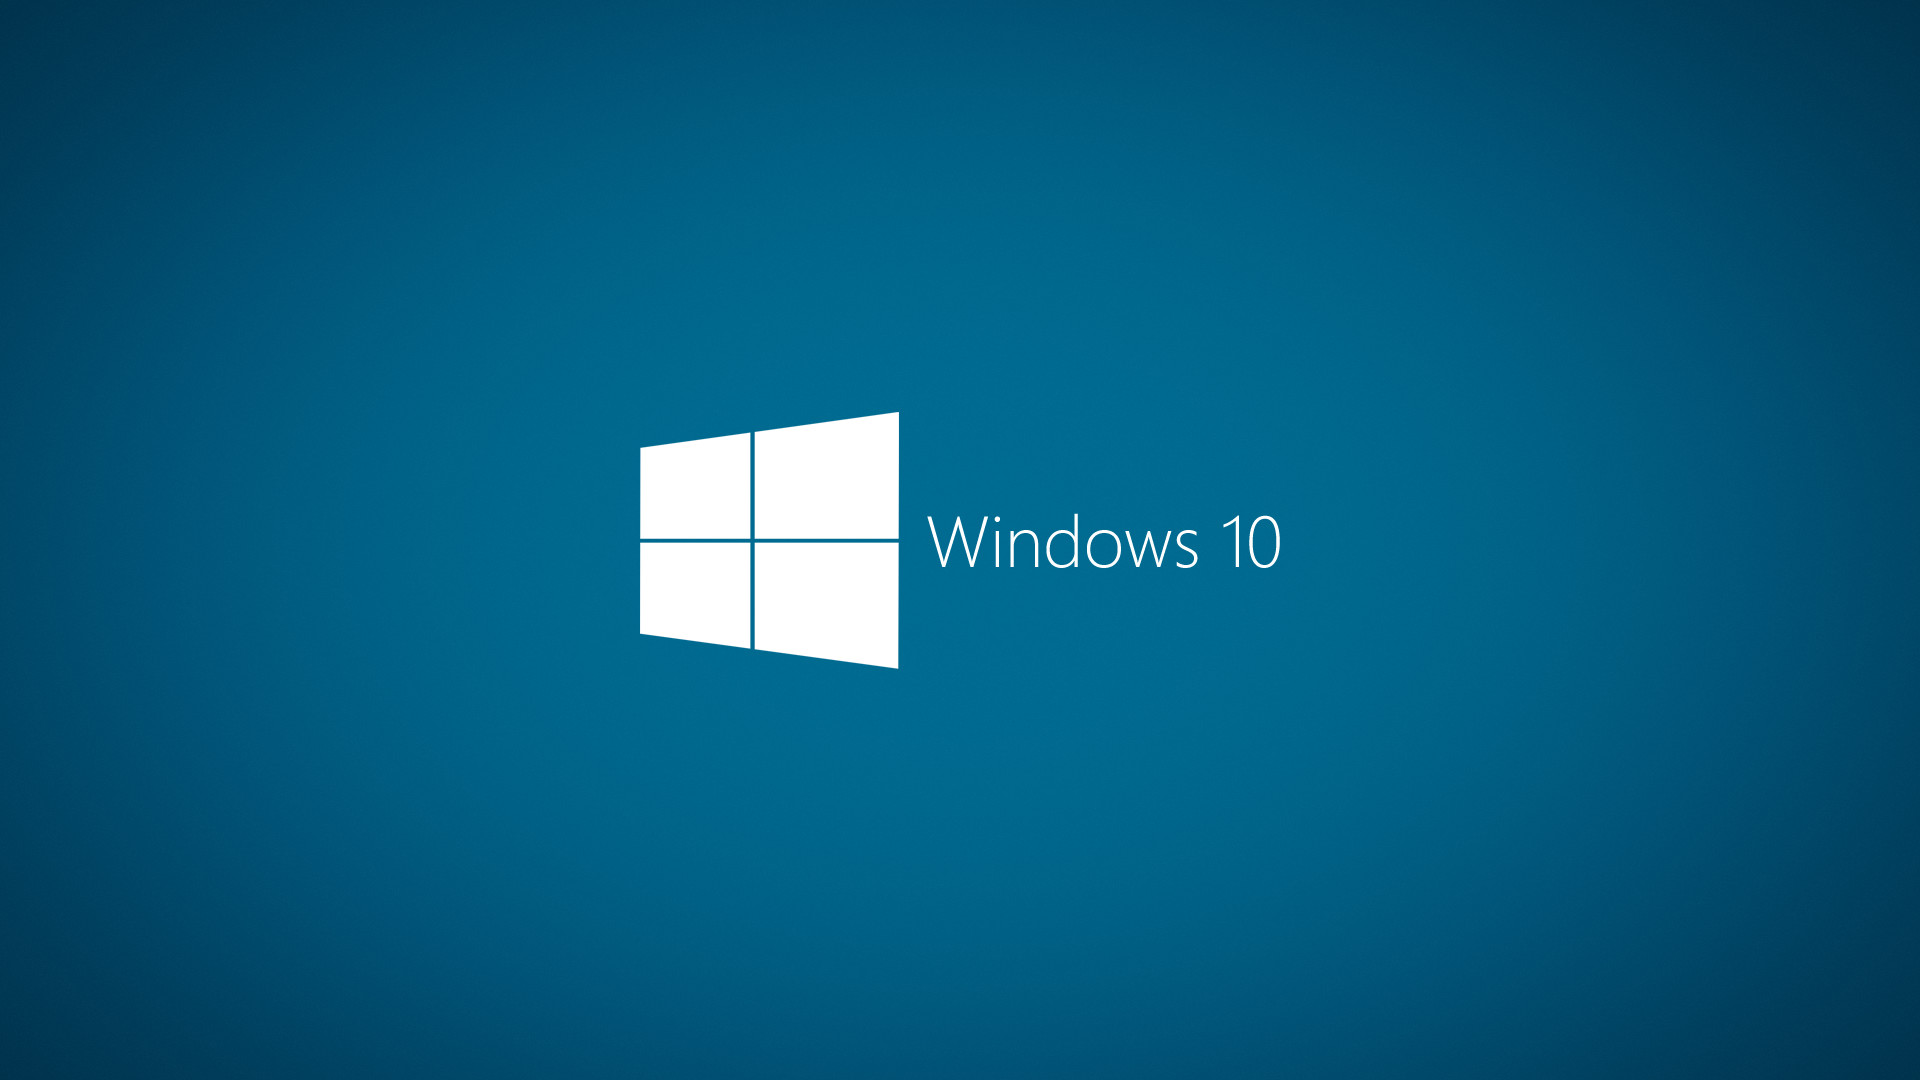 1920x1080 Technology - Windows 10 Microsoft Wallpaper